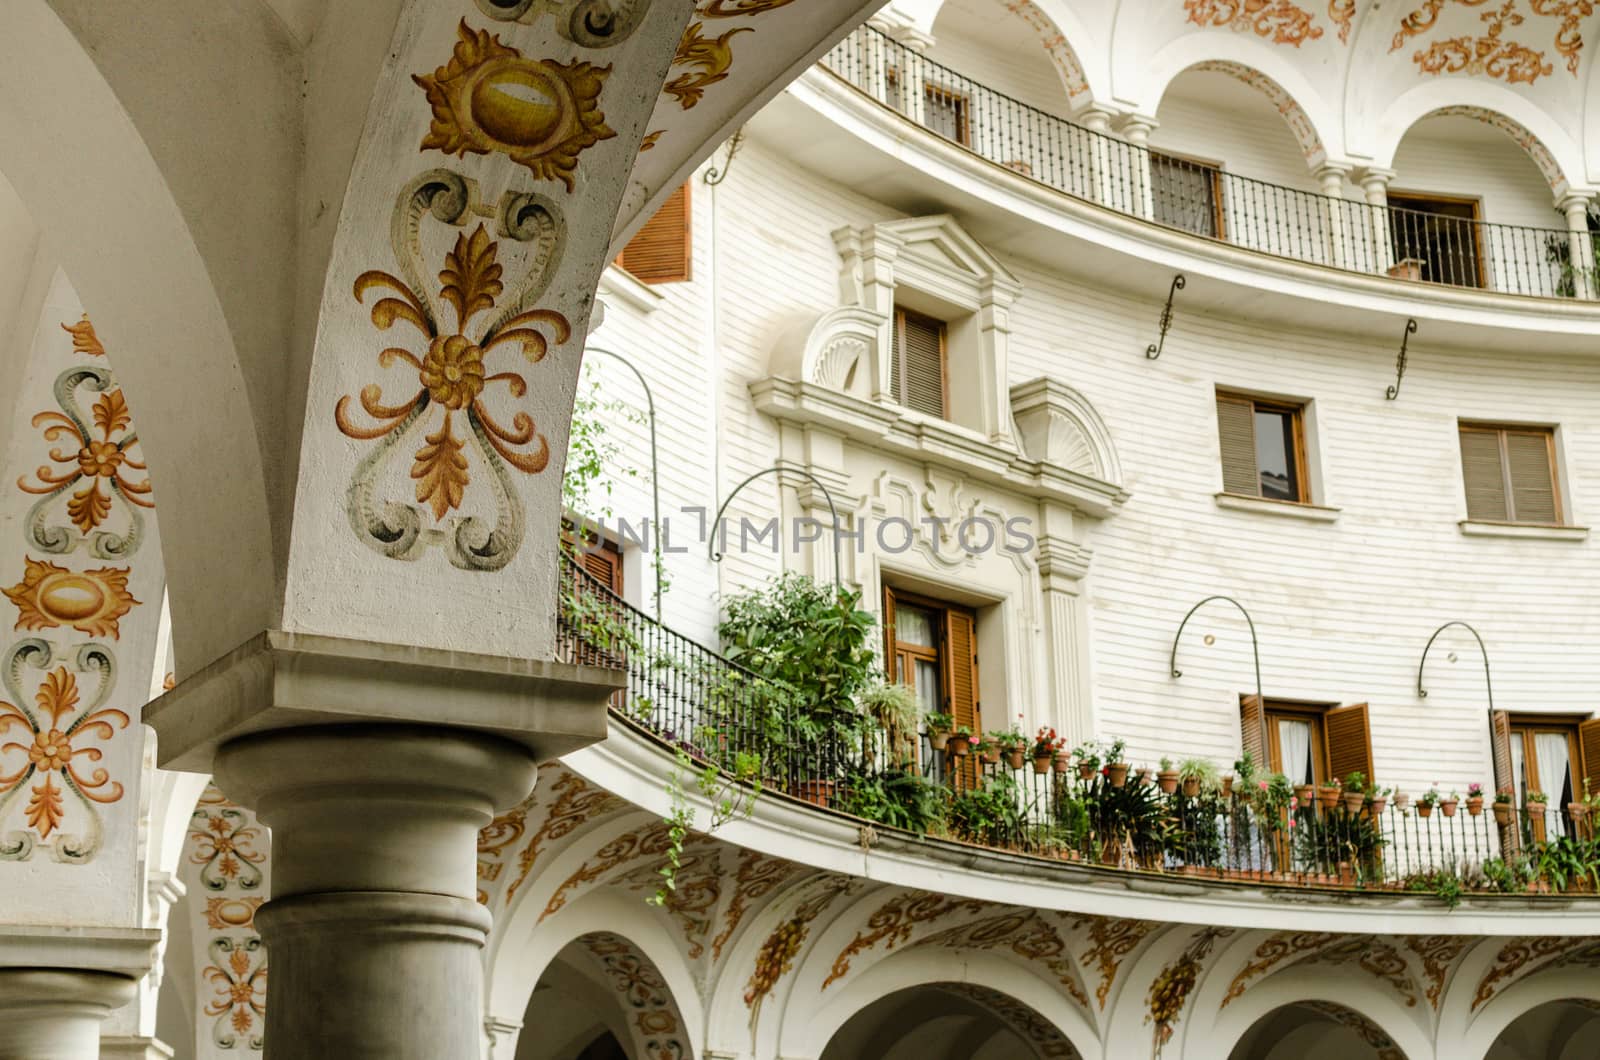 Rich arquitechtural detail from Cabildo square in Sevilla, Spain